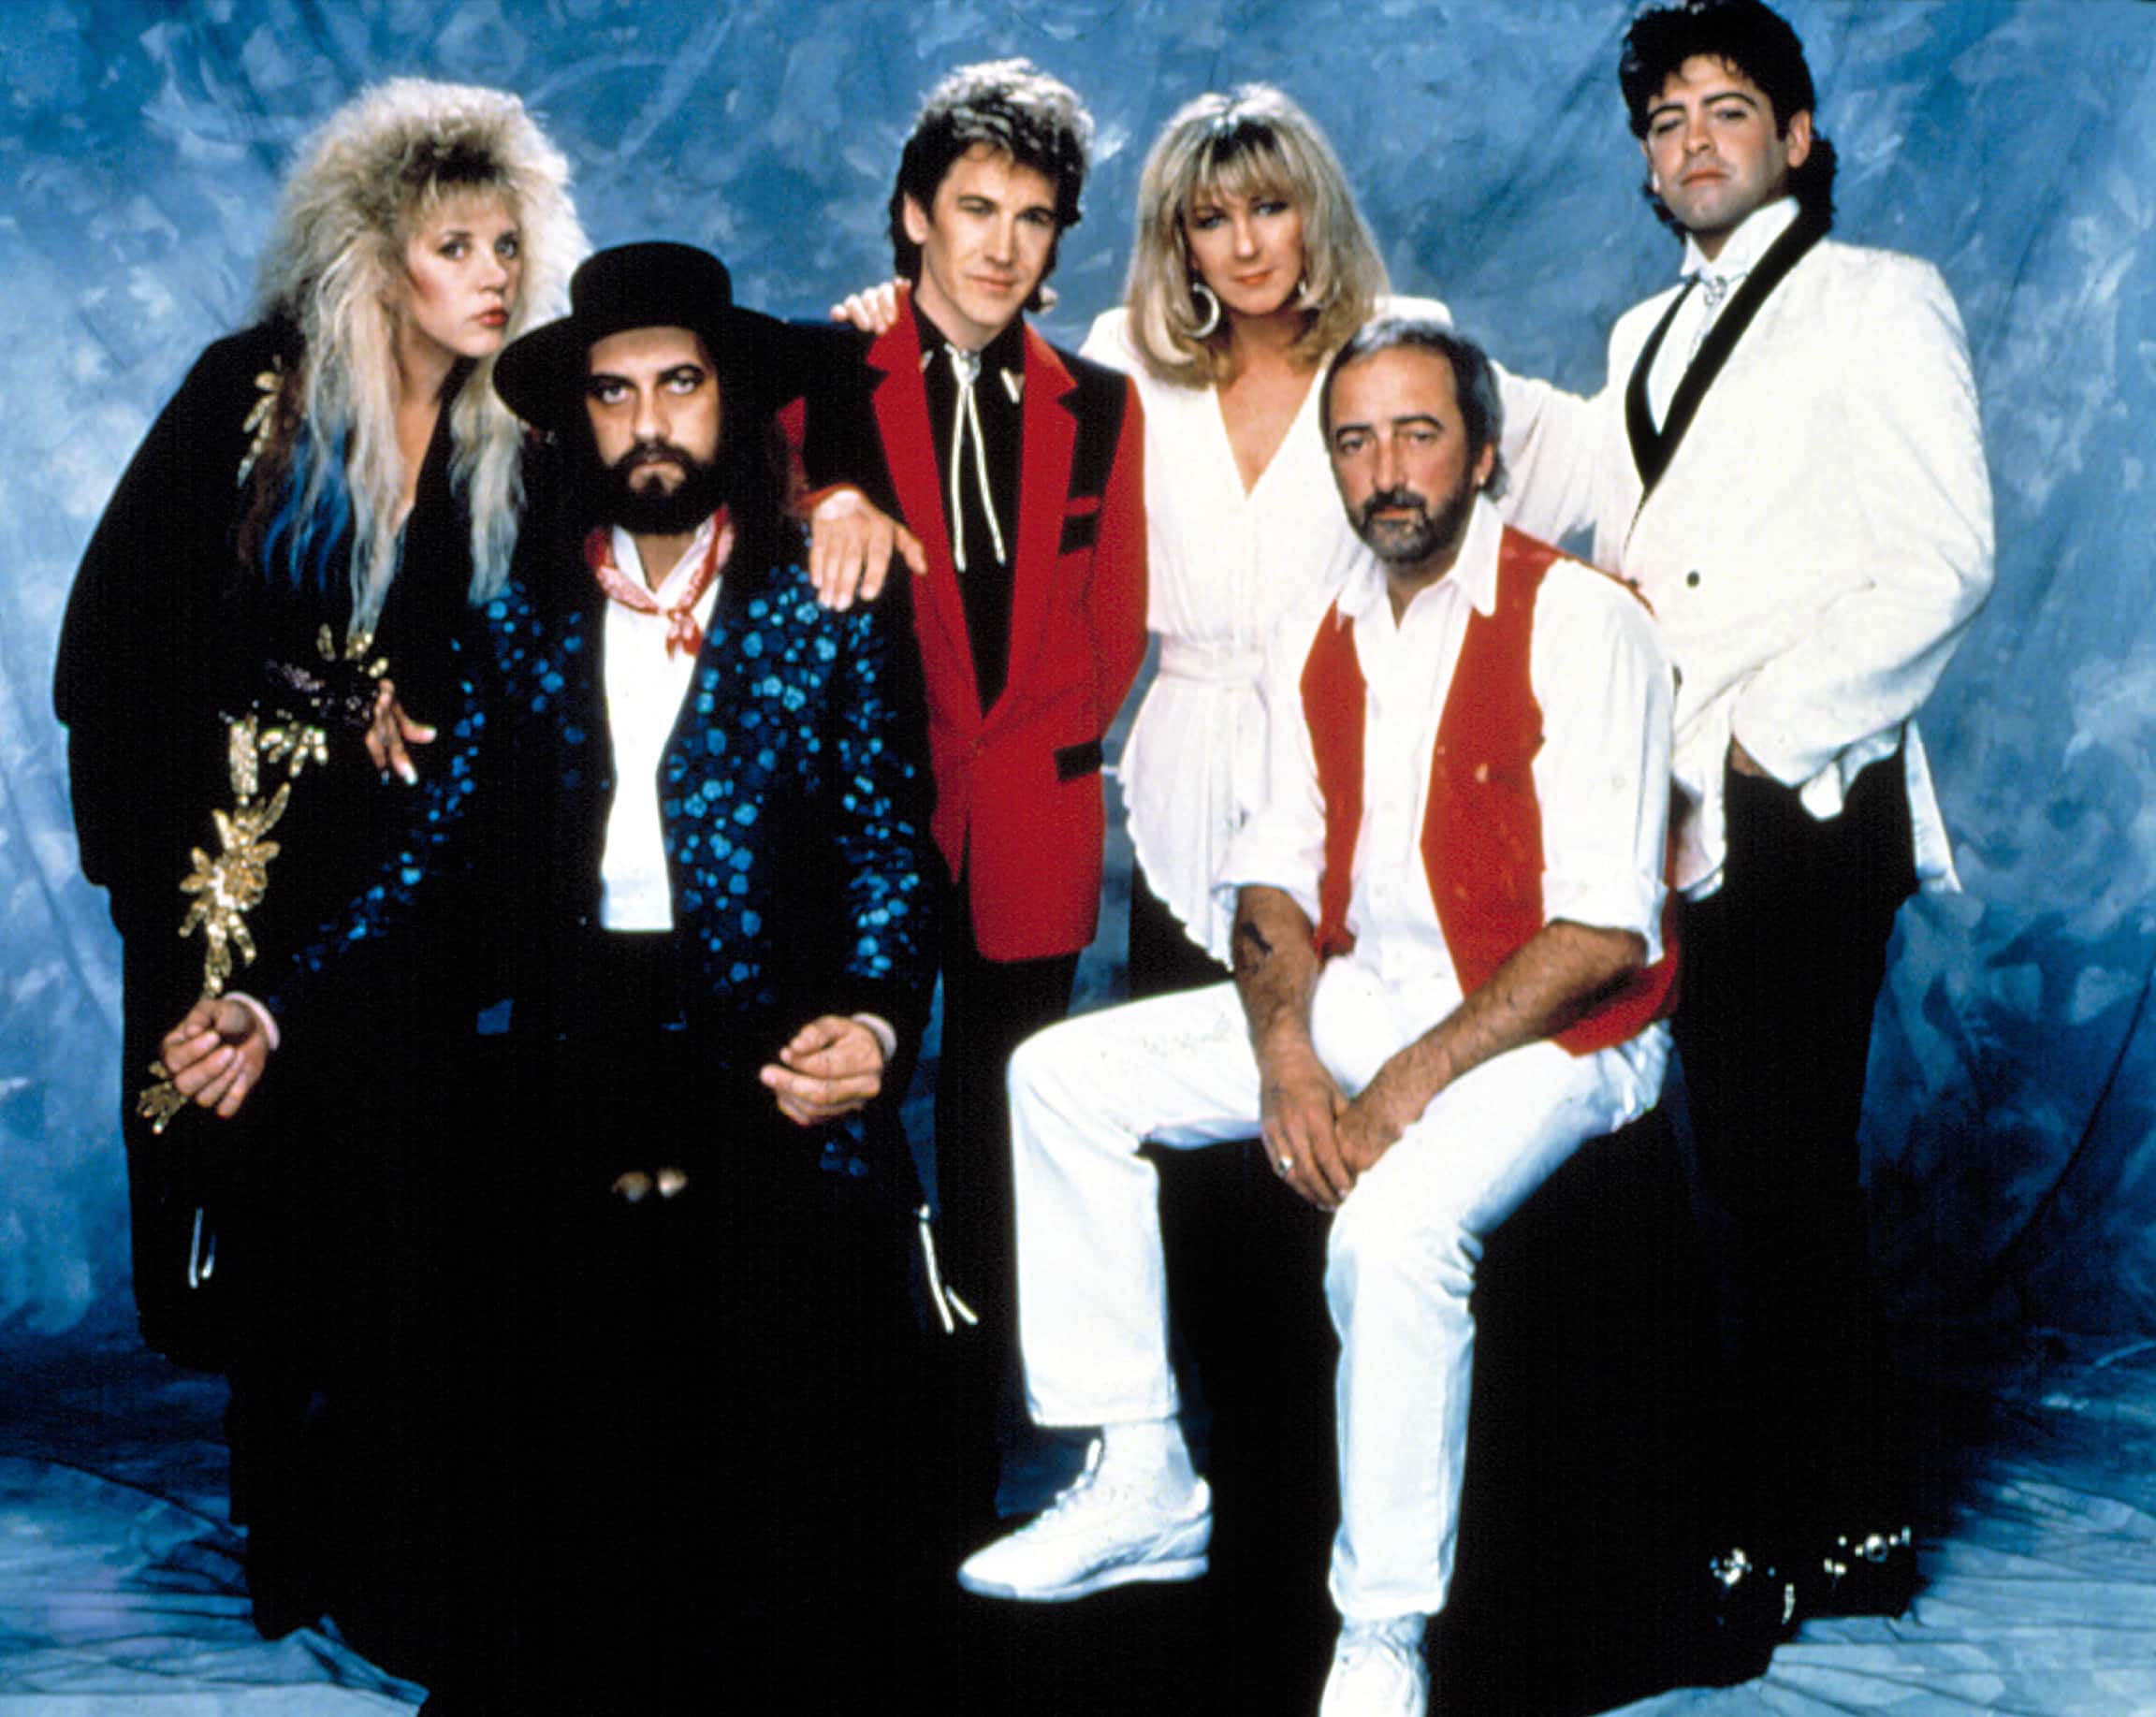 Fleetwood Mac, (Stevie Nicks, Mick Fleetwood, Rick Vito, Christine McVie, John McVie, Billy Burnette), circa early 1990s